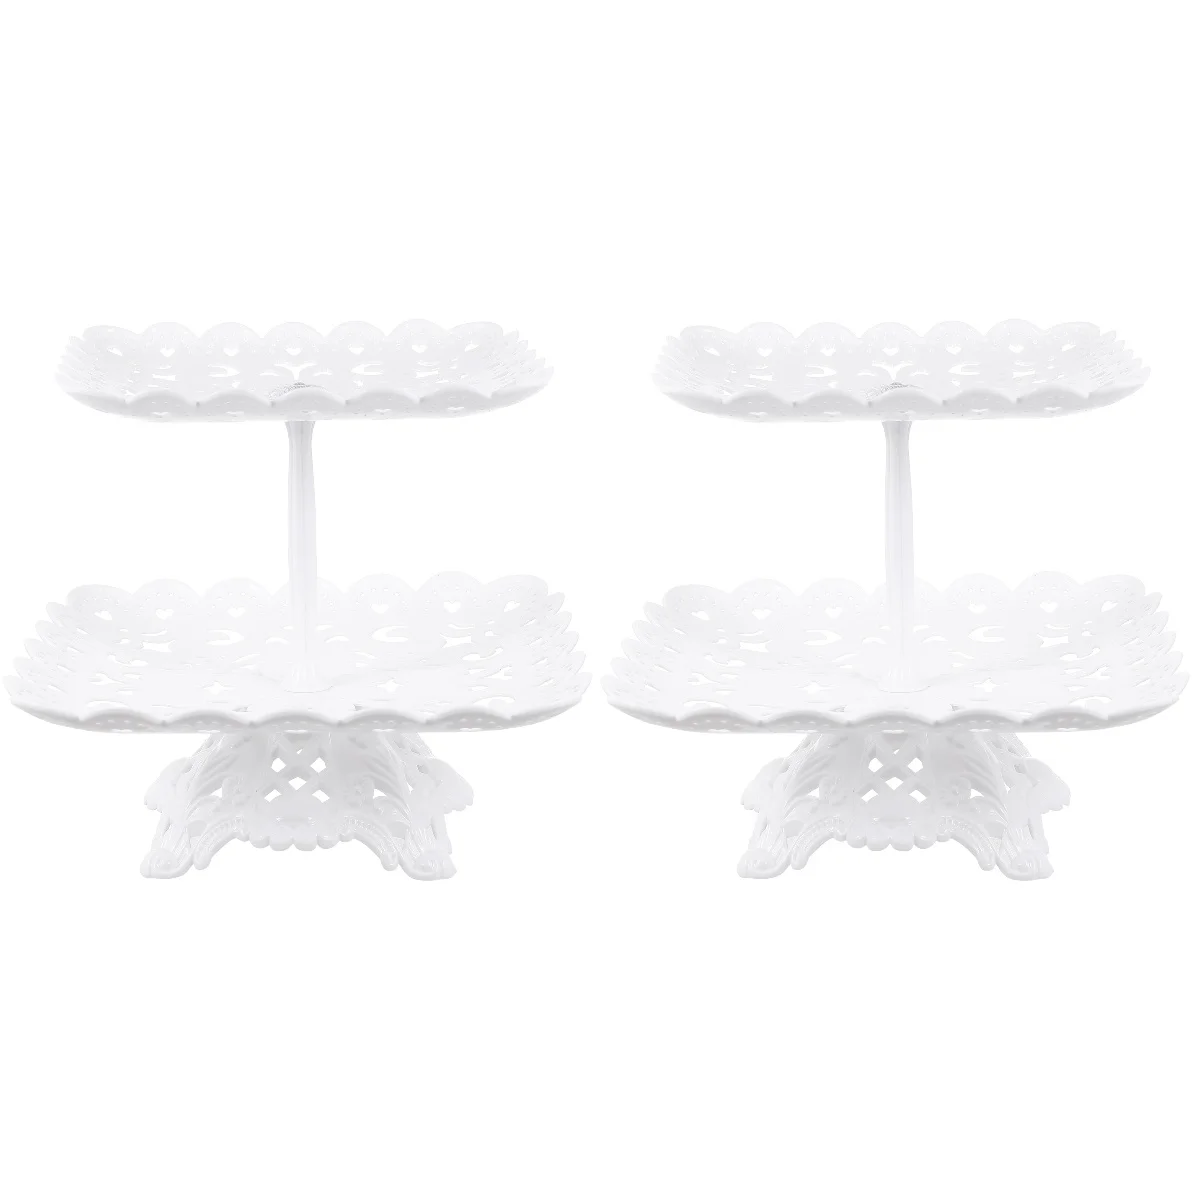 

Dessert Standcupcake Cake Tray Serving Display Tier Wedding Tower Rack Riserholder Stands Table Stable